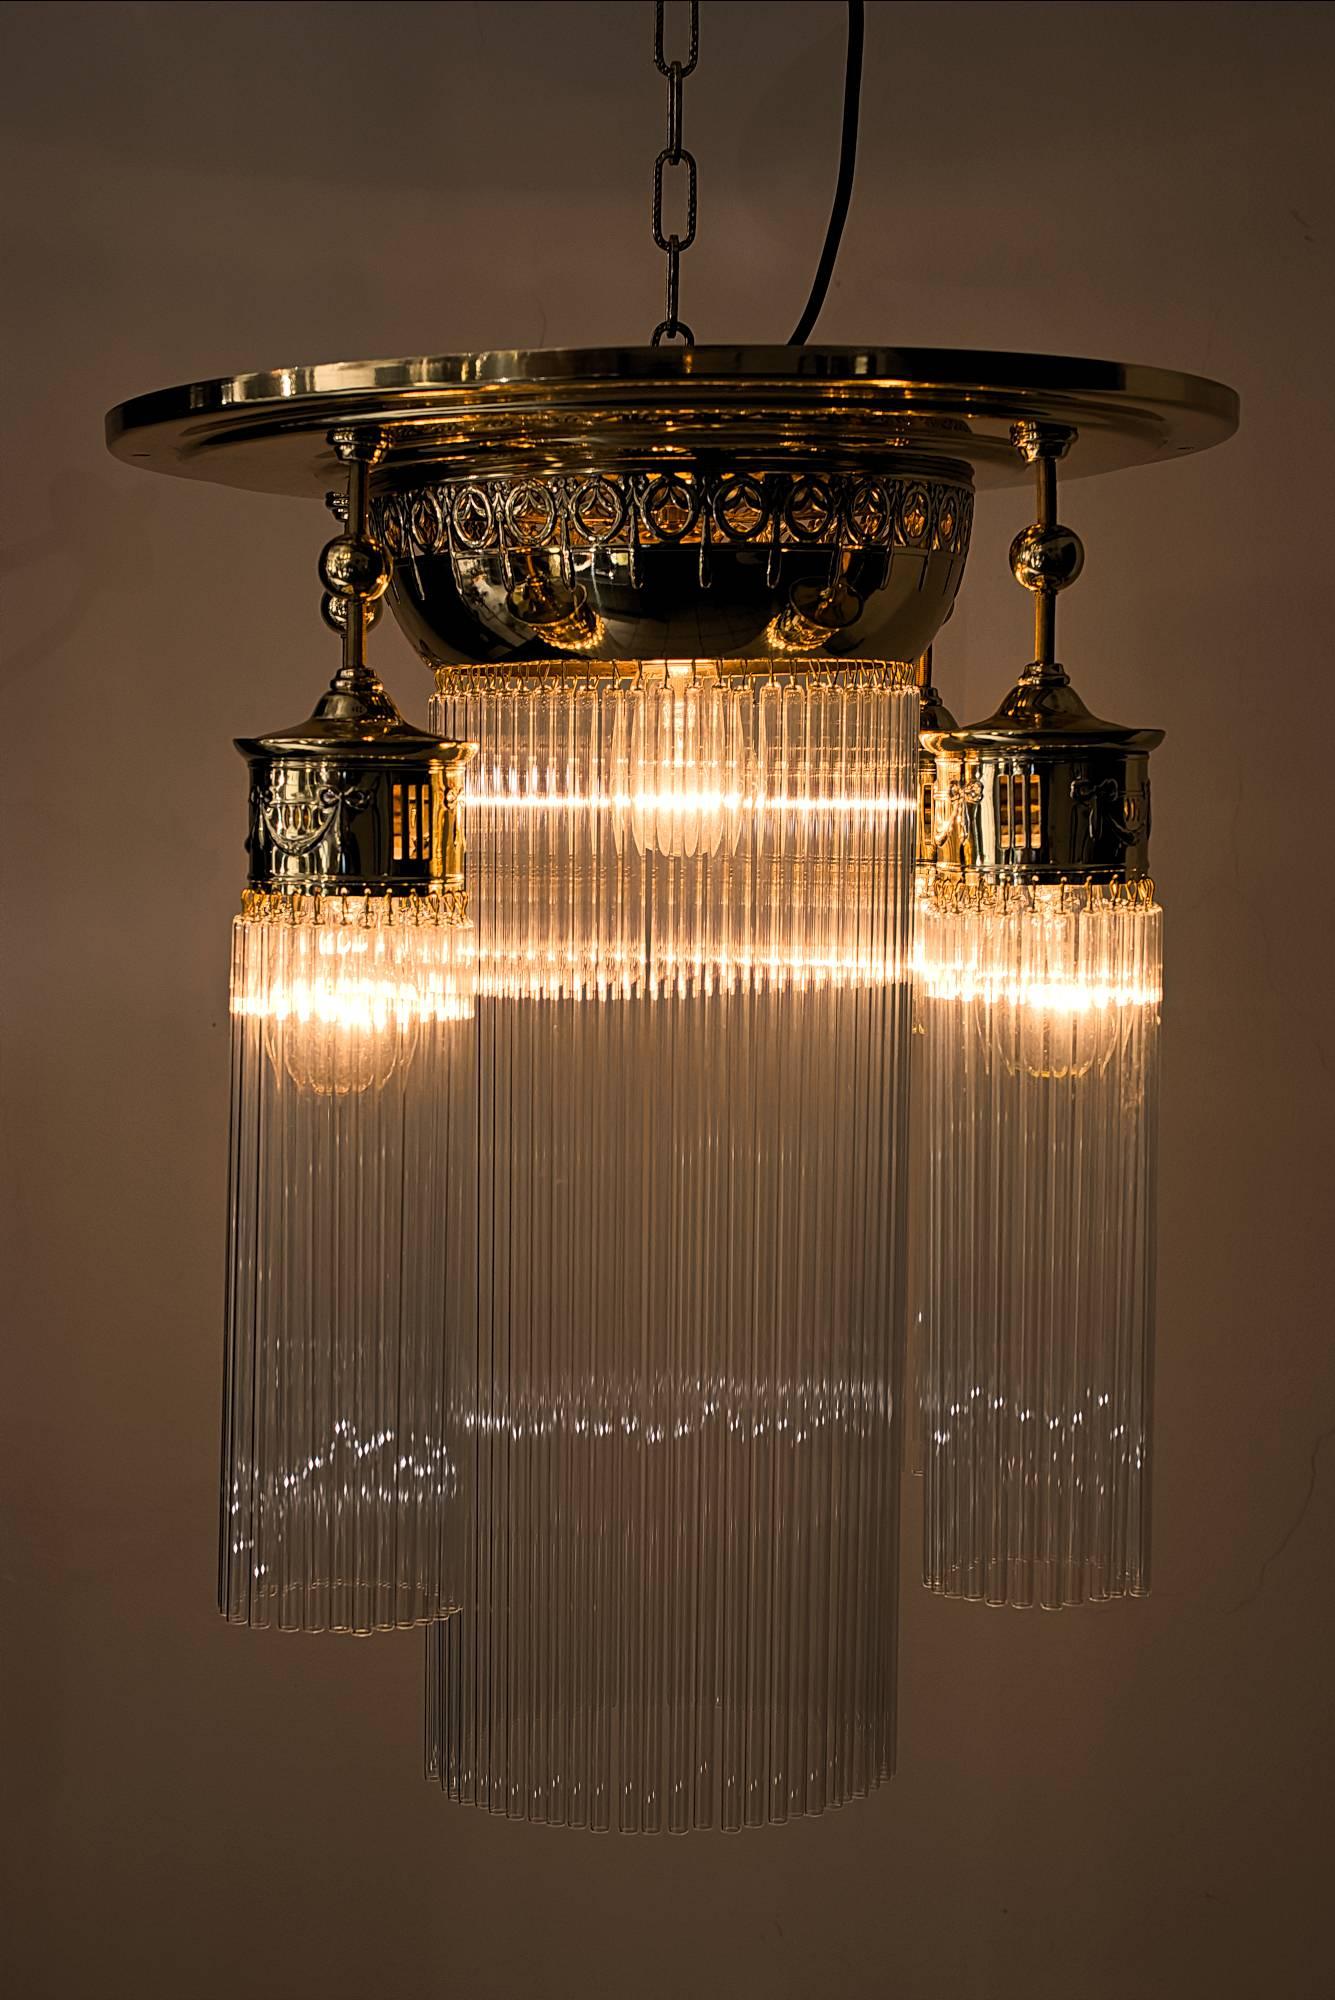 Early 20th Century Jugendstil Ceiling Lamp